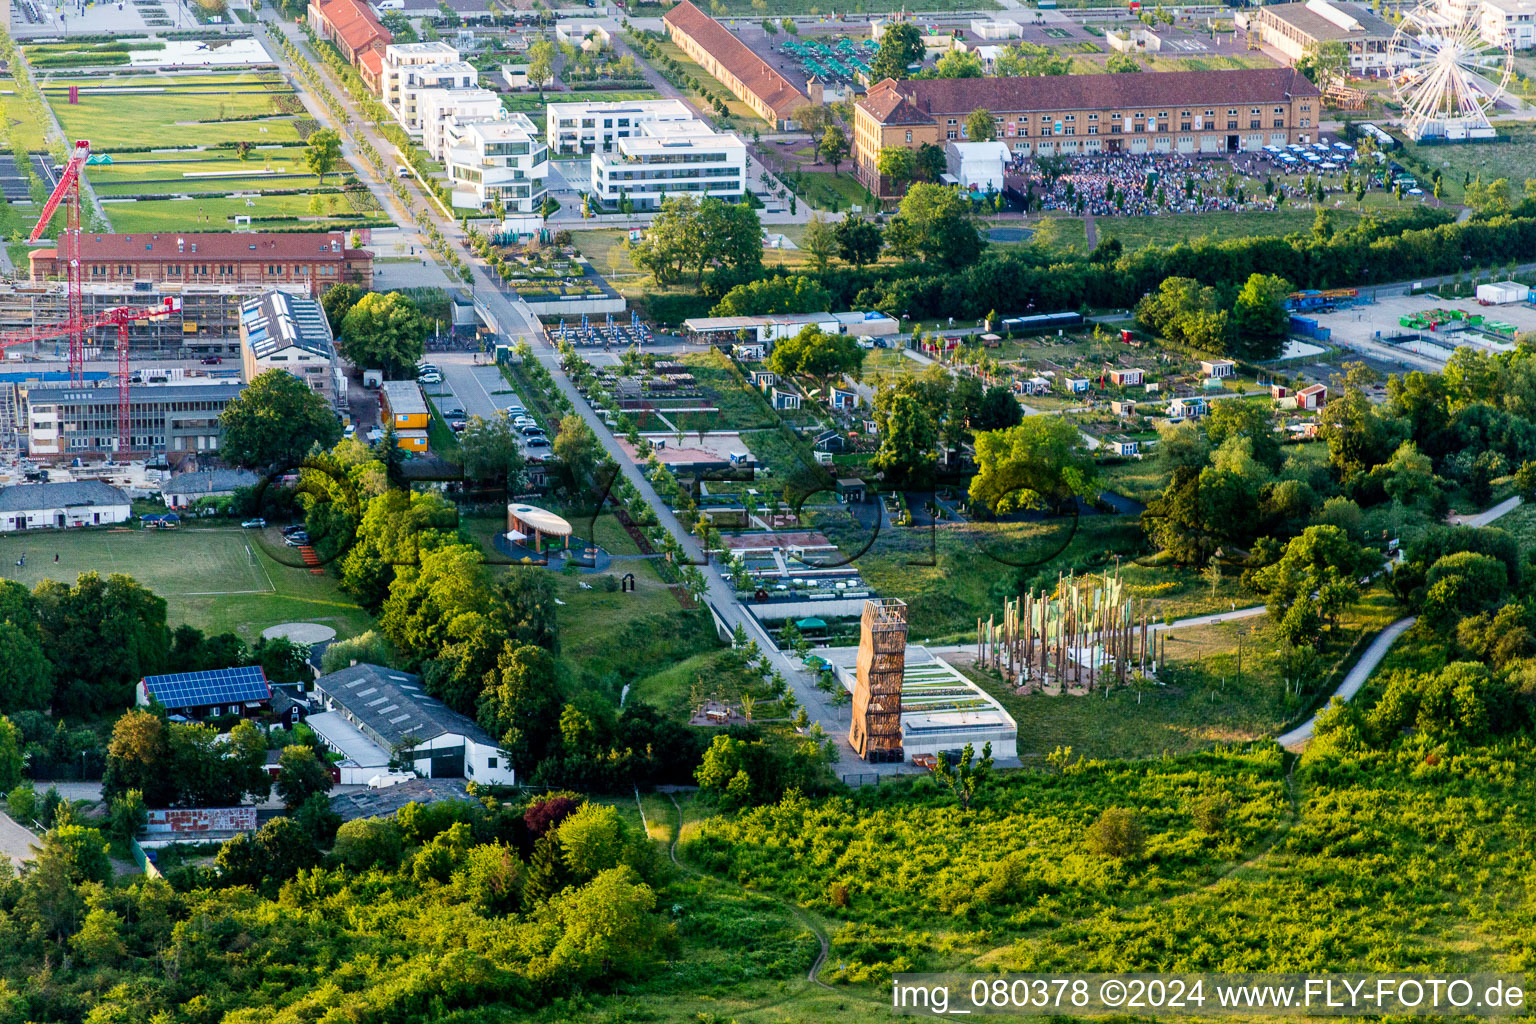 Aerial view of Exhibition grounds of the Landesgartenschau 2015 in Landau in der Pfalz in the state Rhineland-Palatinate, Germany